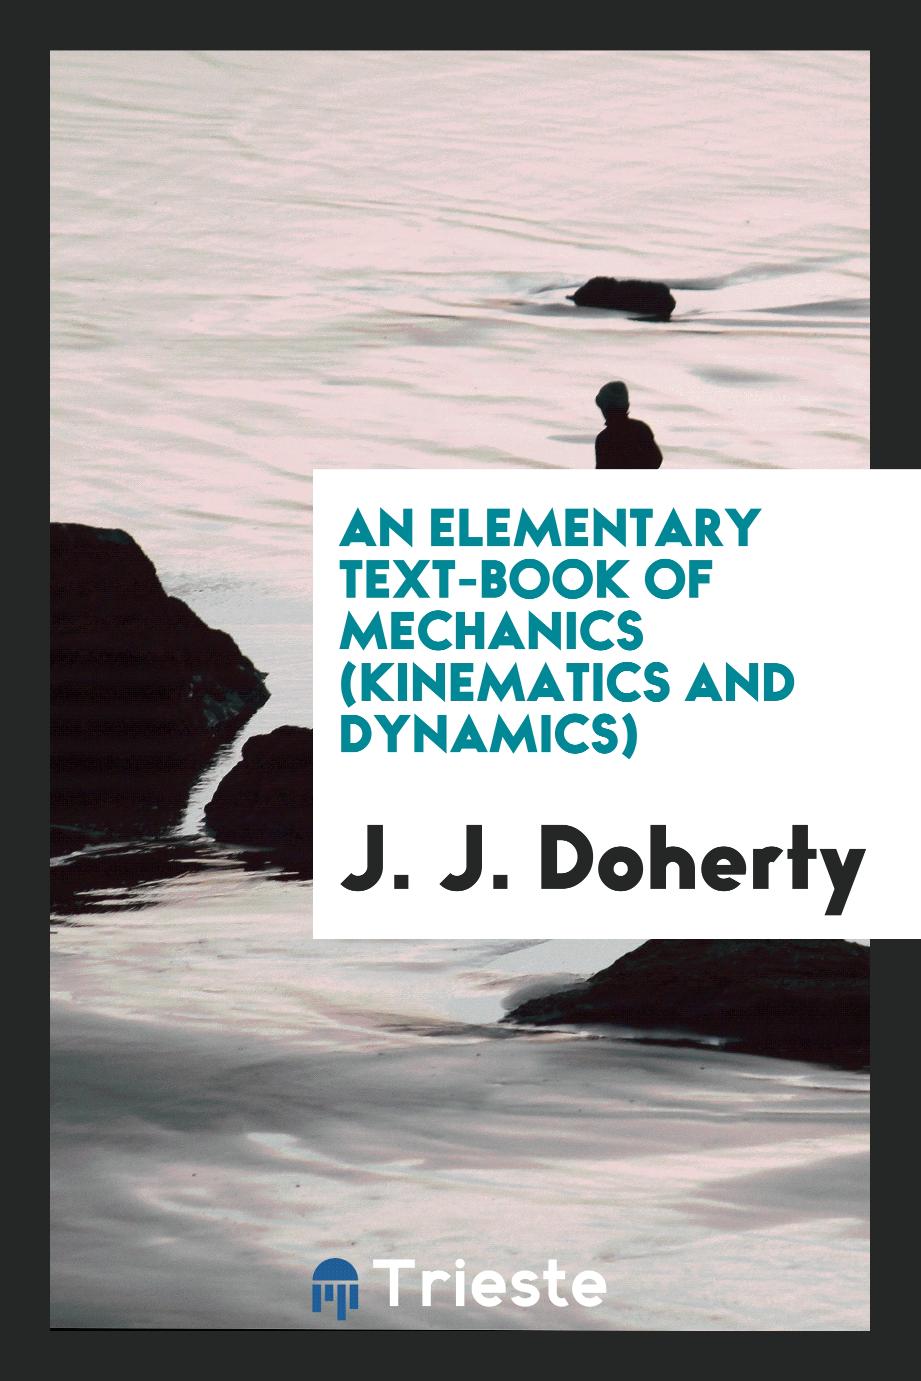 An Elementary Text-Book of Mechanics (Kinematics and Dynamics)